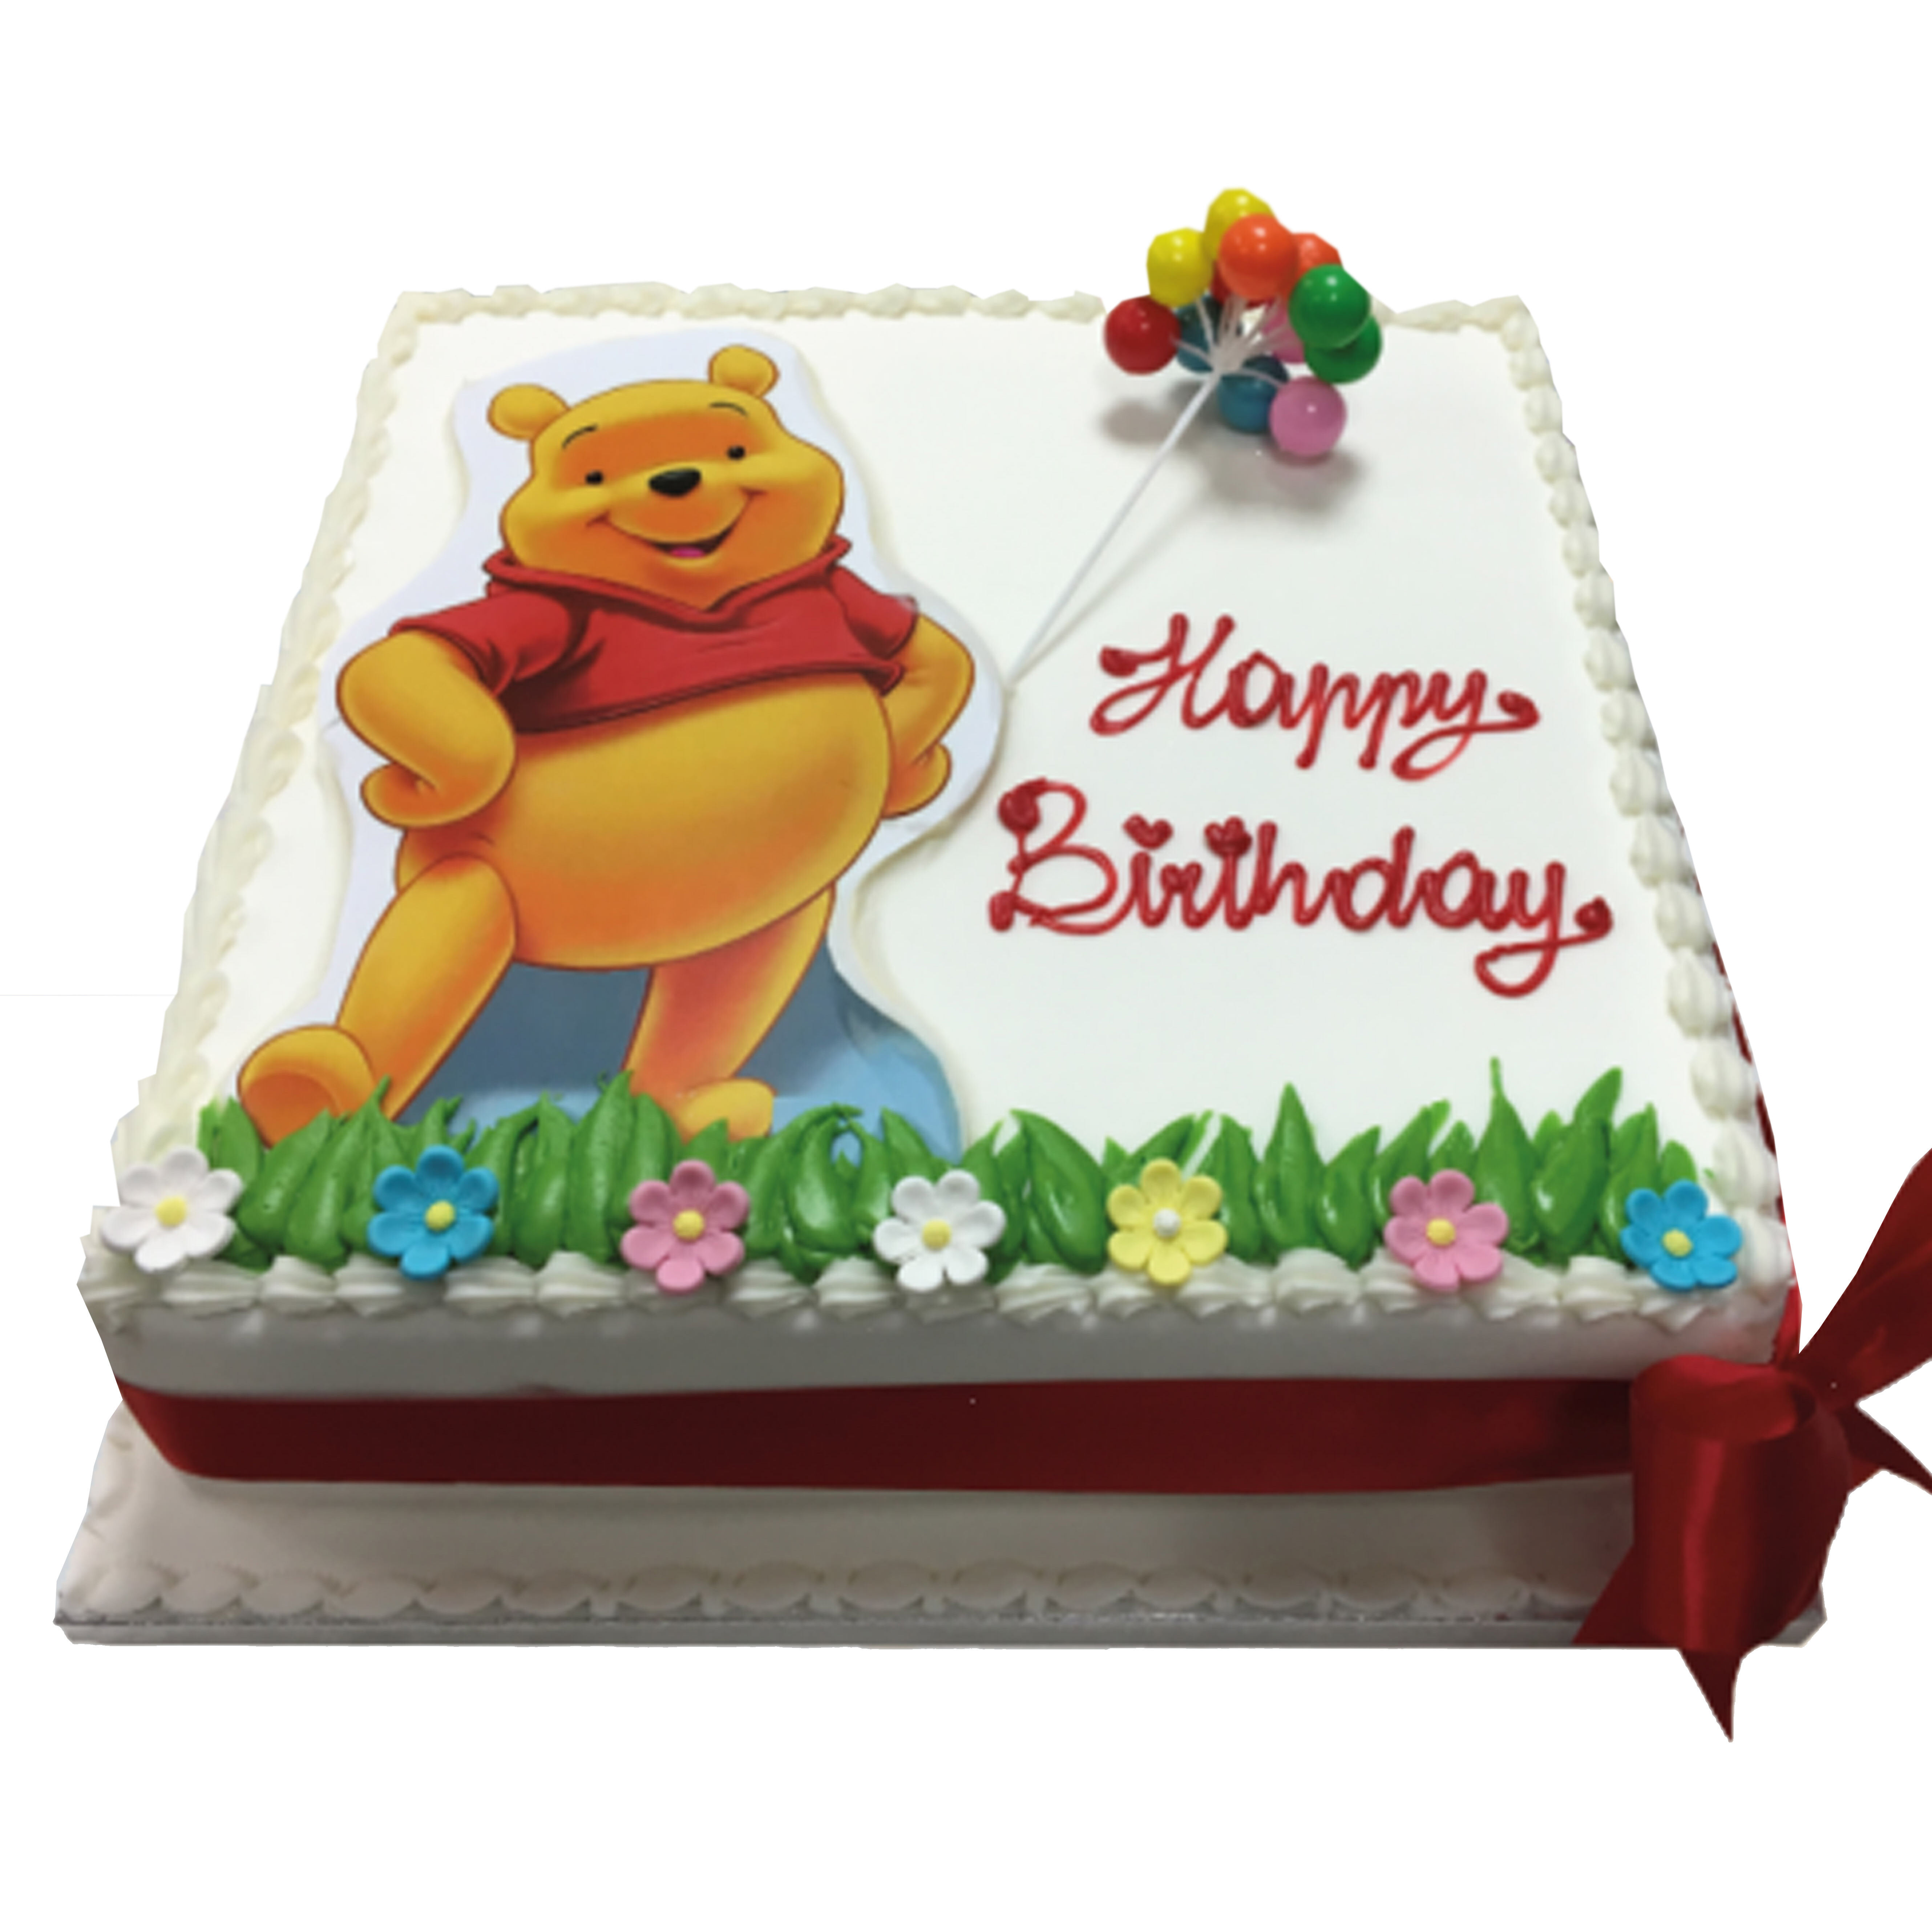 Order Winnie the Pooh Cake Online | Winnie the Pooh Birthday Cake